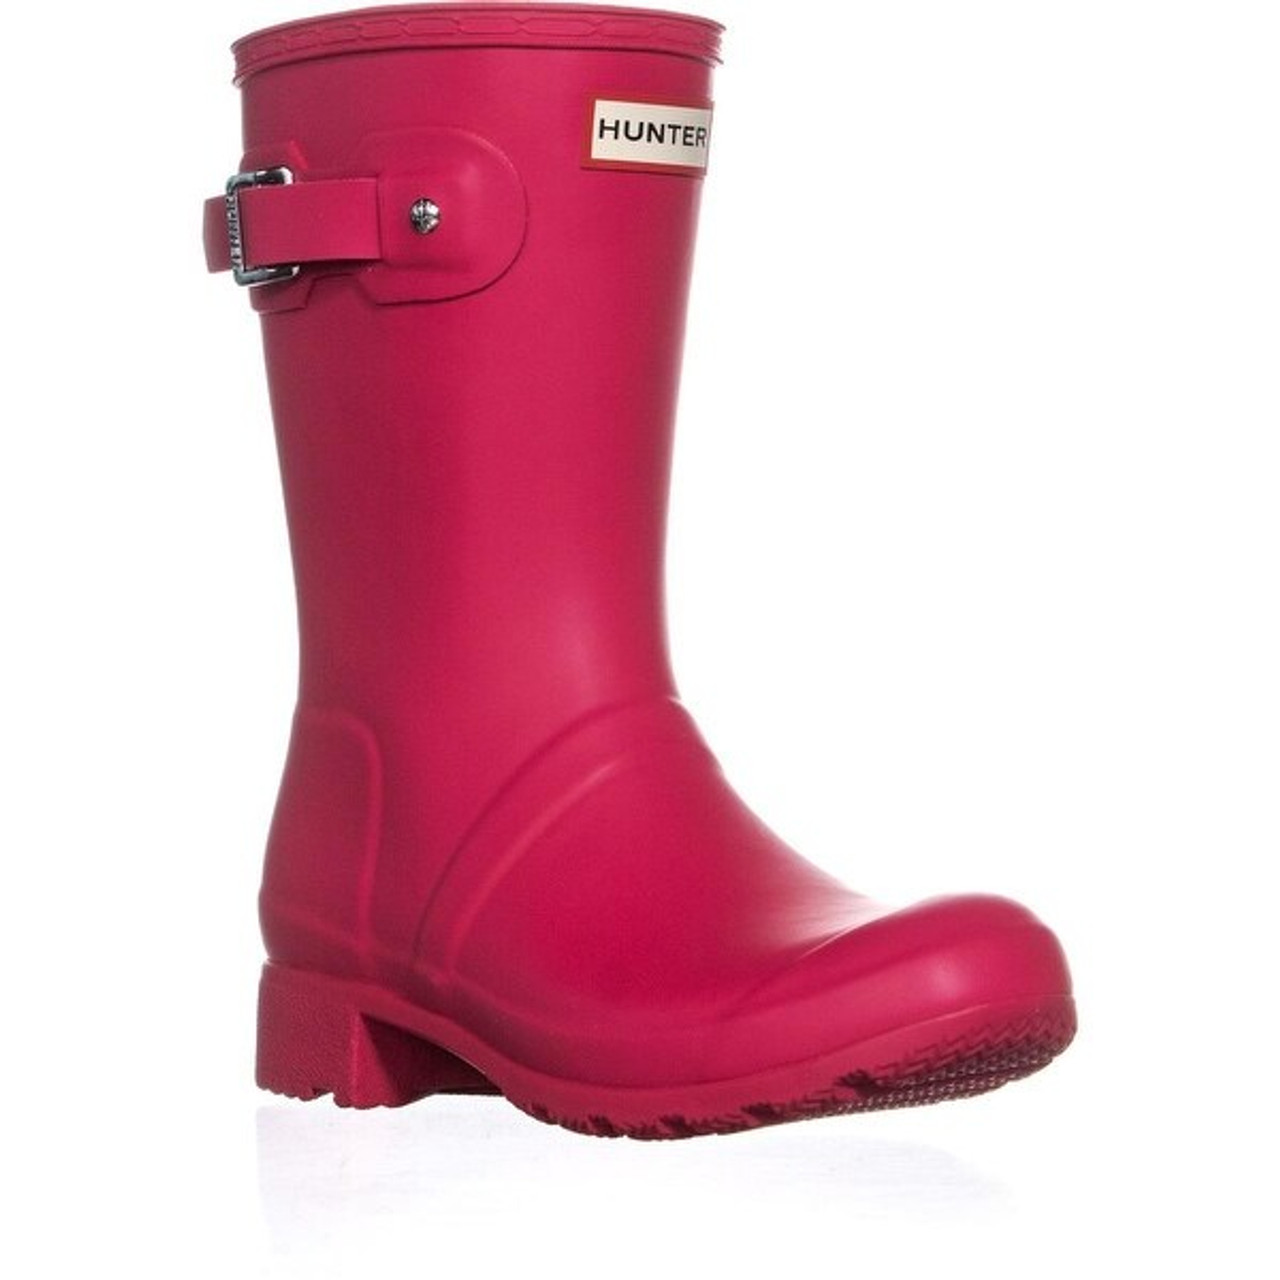 short pink rain boots